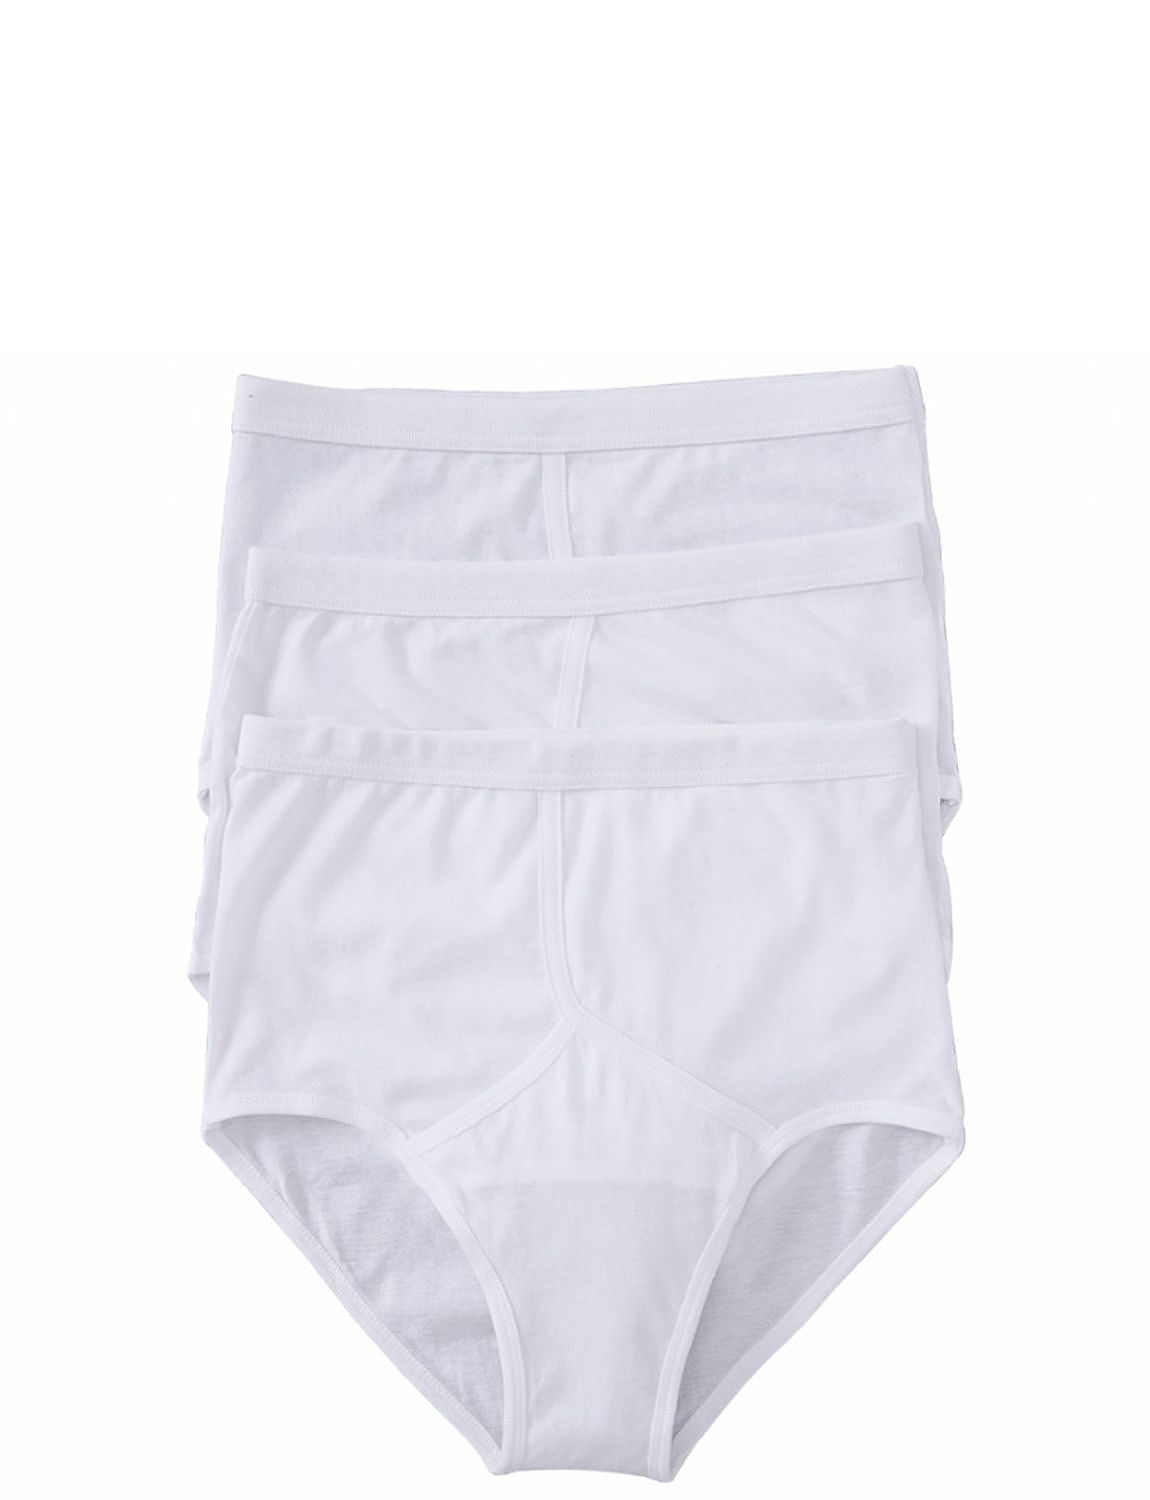 High Rise Plain Y-Front Briefs - Menswear Underwear | Chums